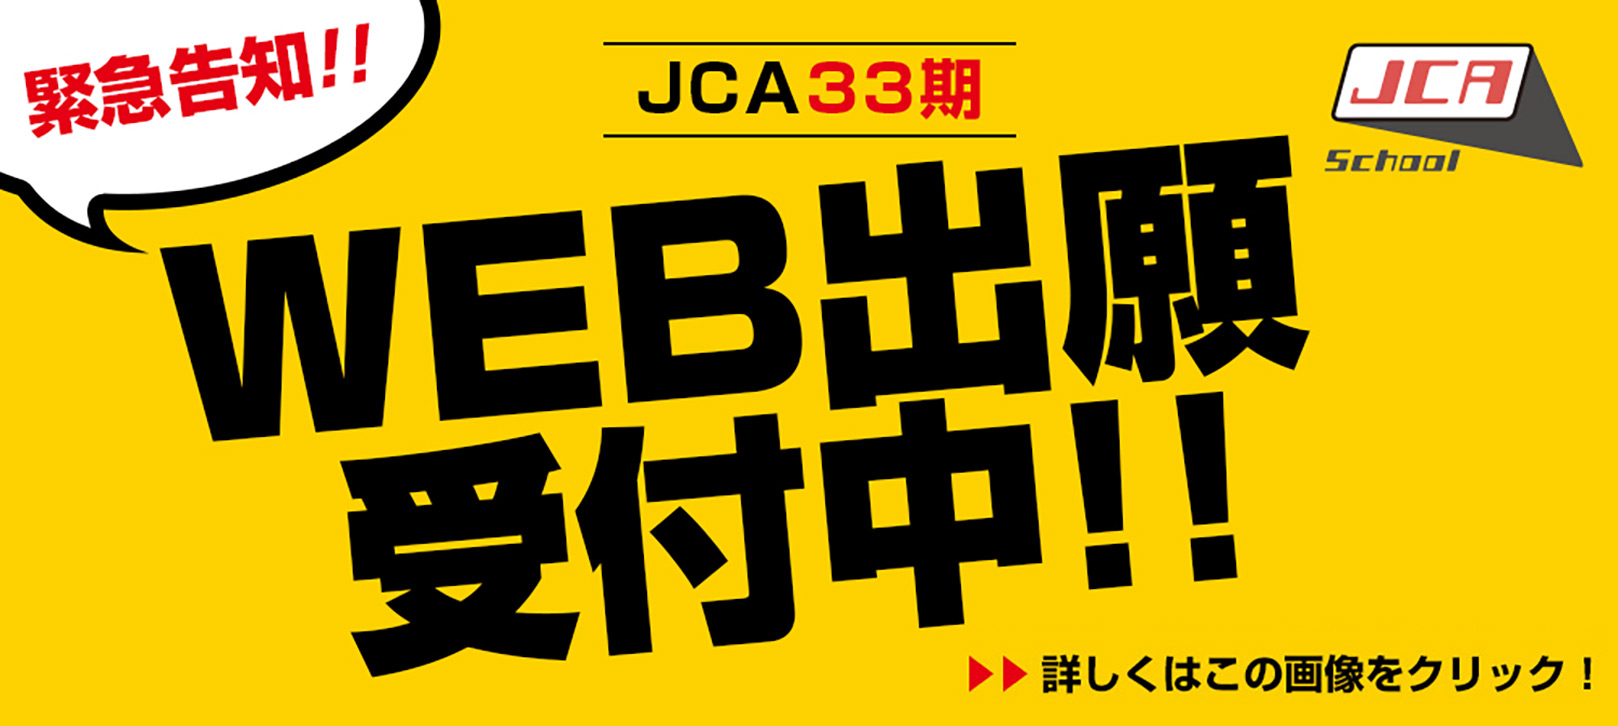 SchoolJCA 緊急告知!! JCA33期 WEB出願 受付中!!